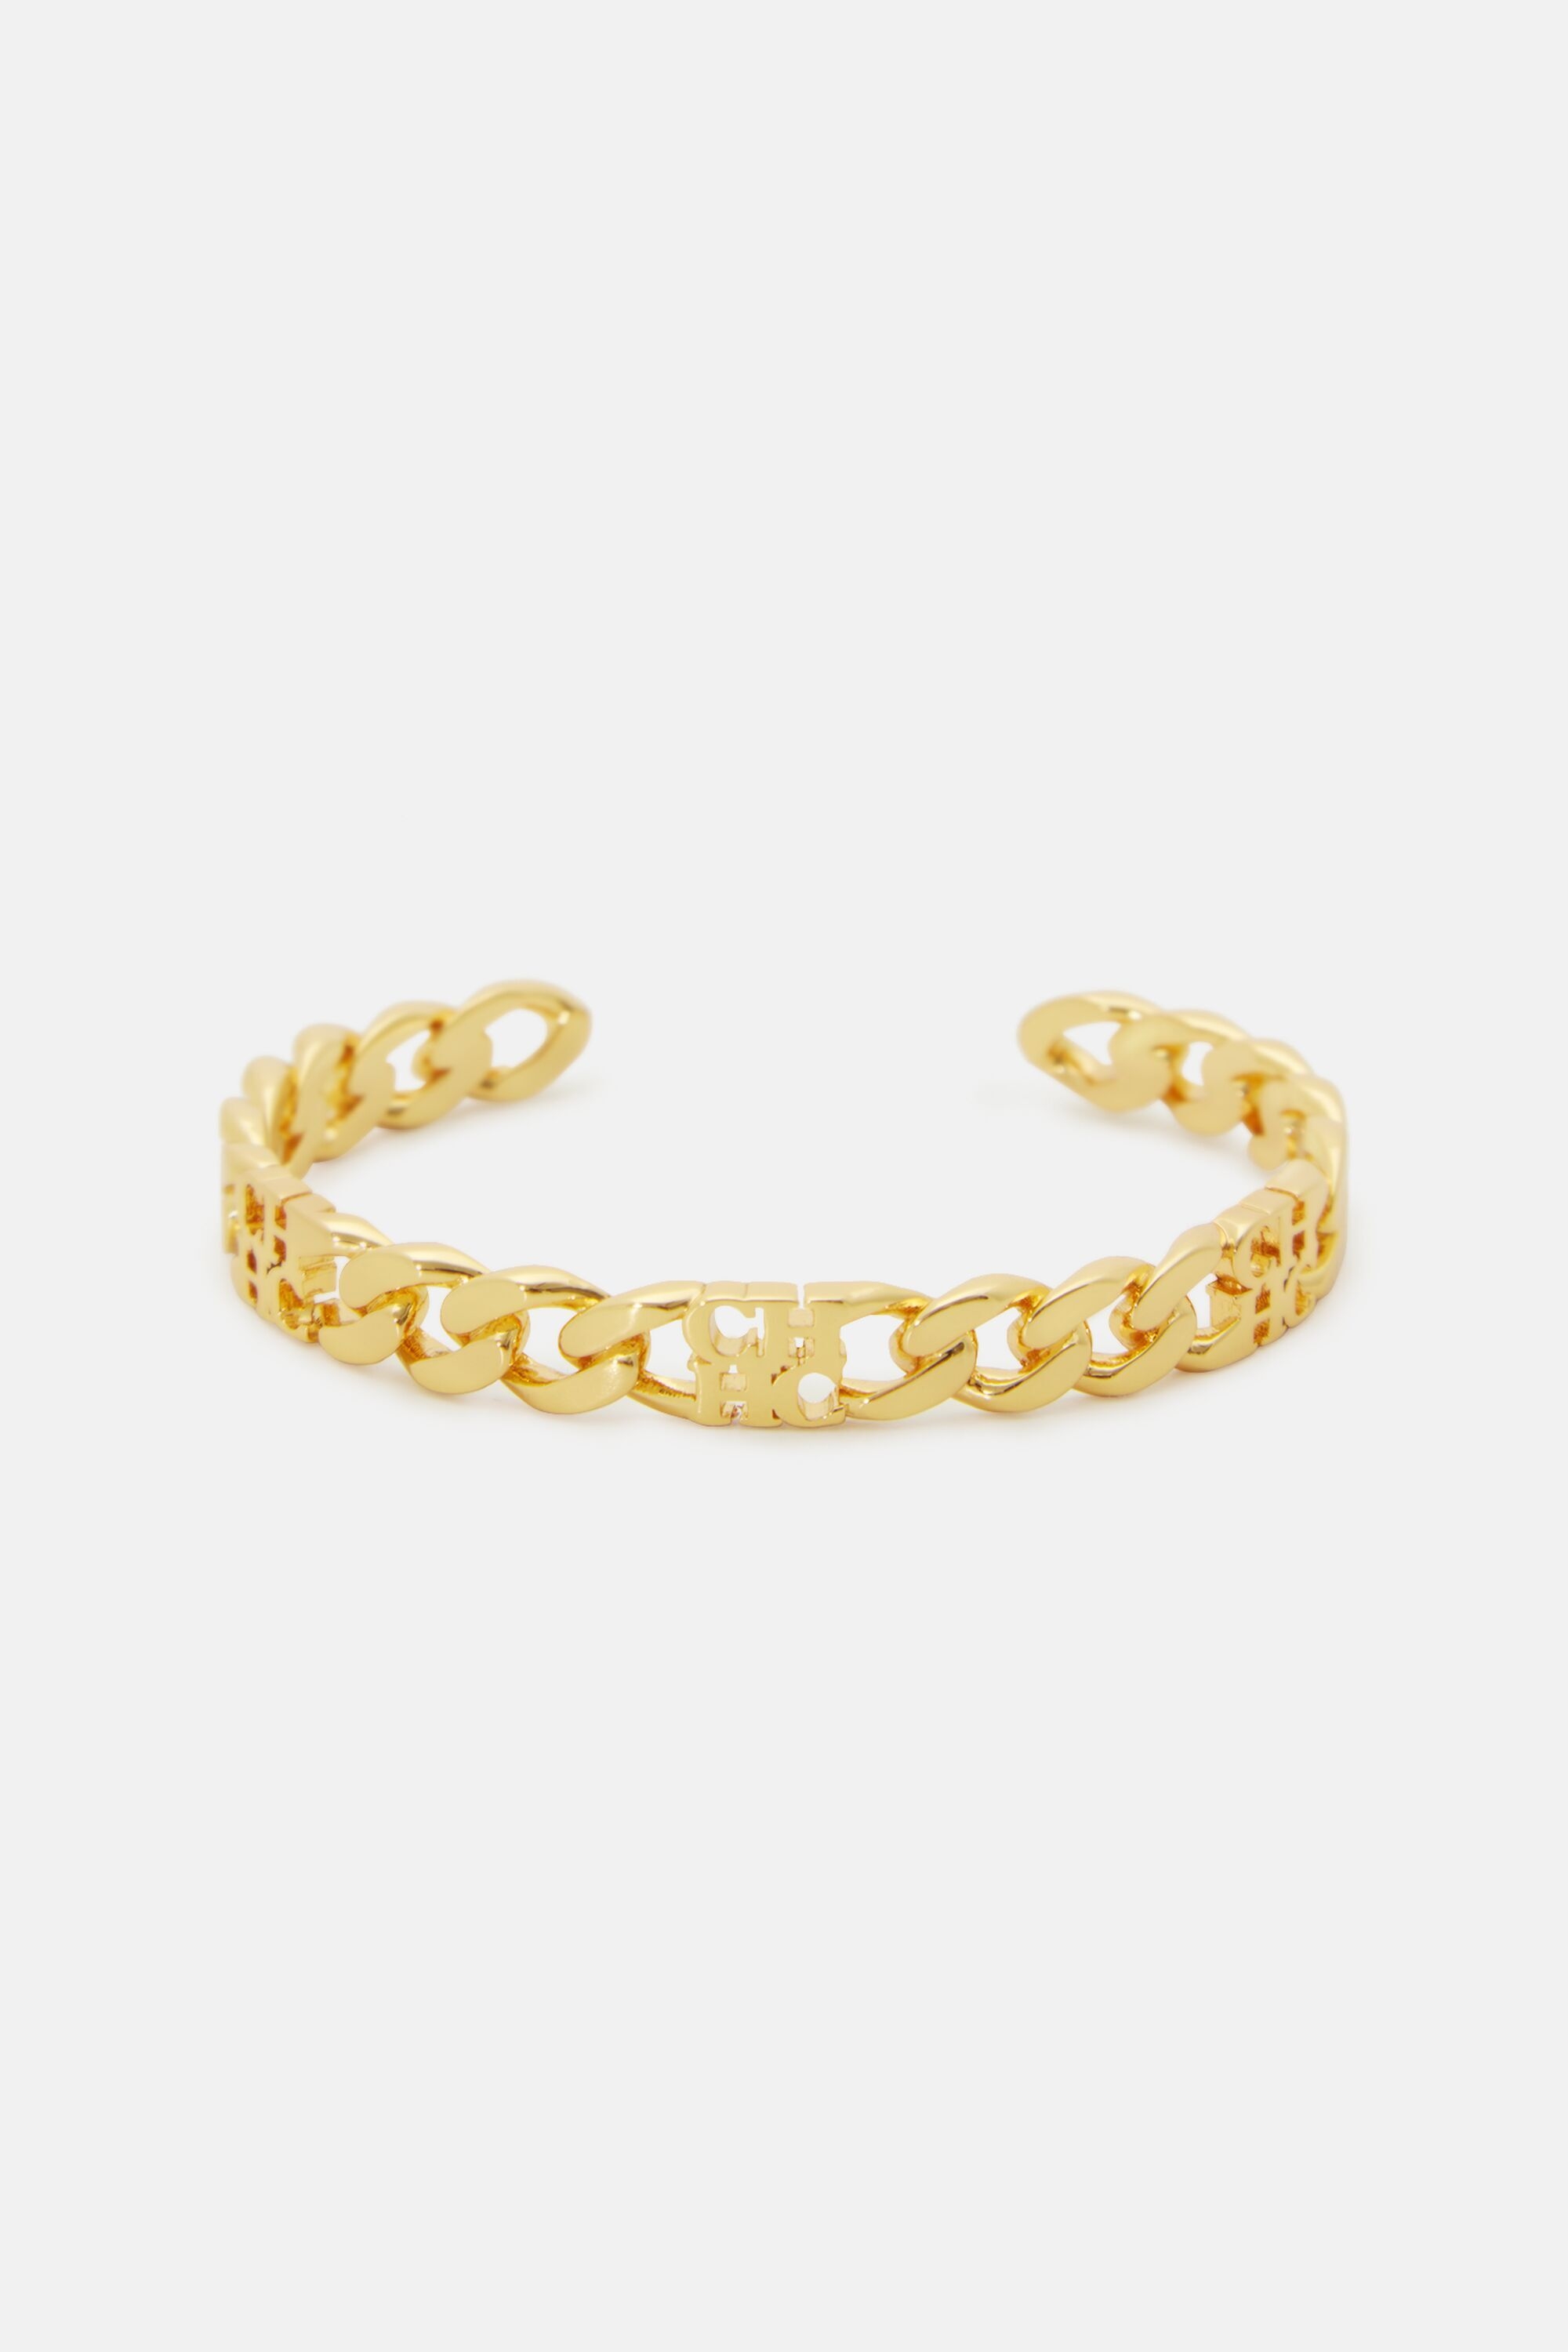 CH Chain bracelet